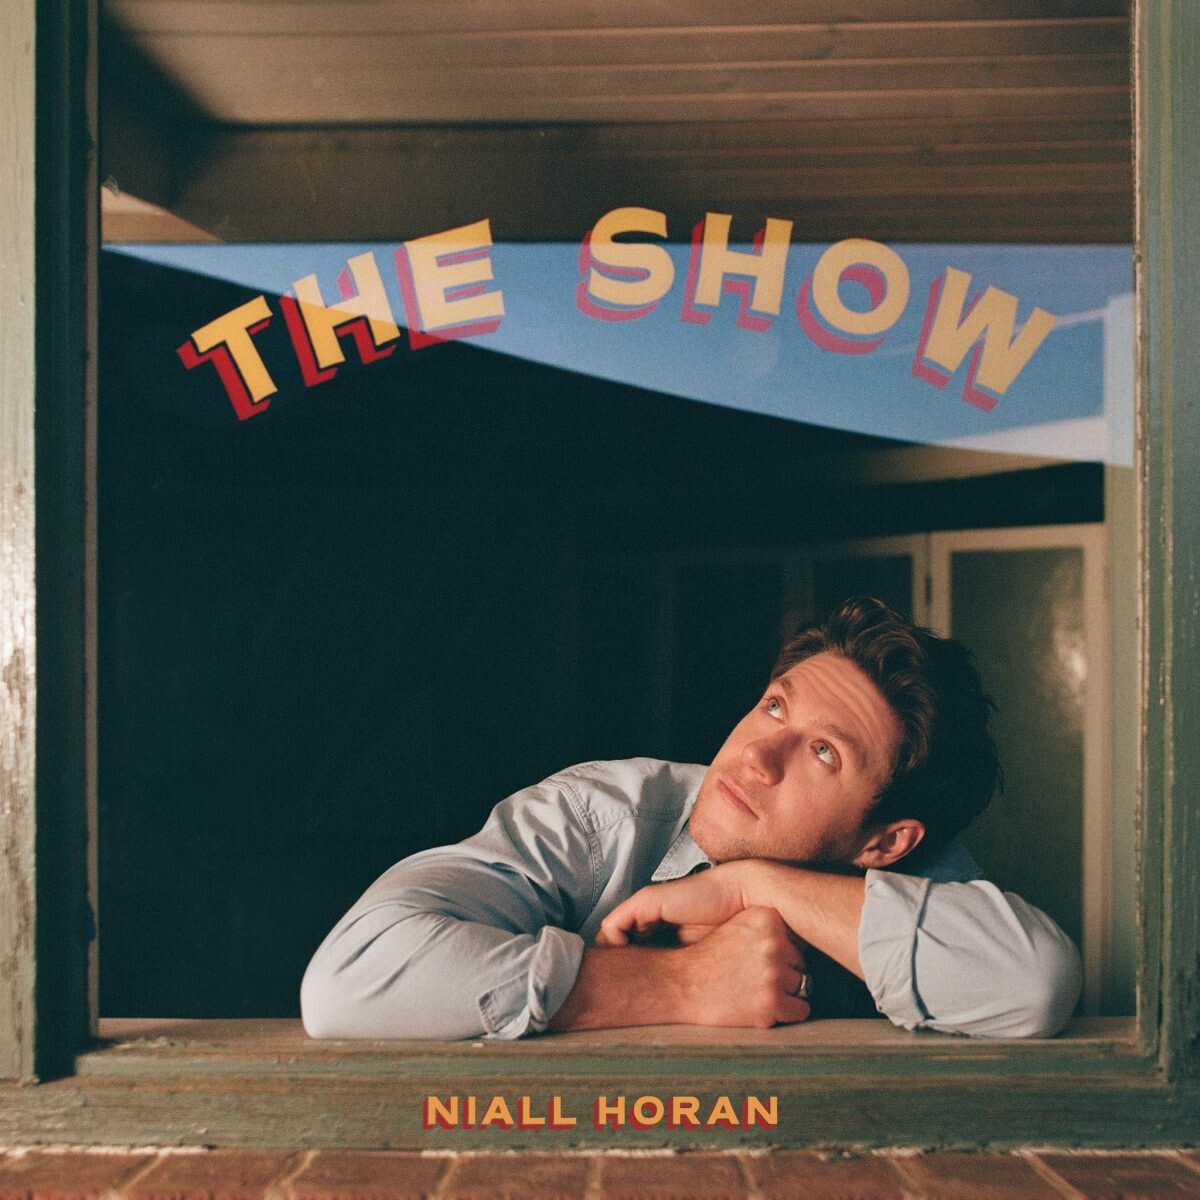 "Niall Horan" ปล่อยซิงเกิลใหม่ล่าสุด "Heaven" เพลงรักฟีลกู้ด จาก "The Show" อัลบั้มเดี่ยวชุดที่ 3 แพลนปล่อย 9 มิถุนายนนี้